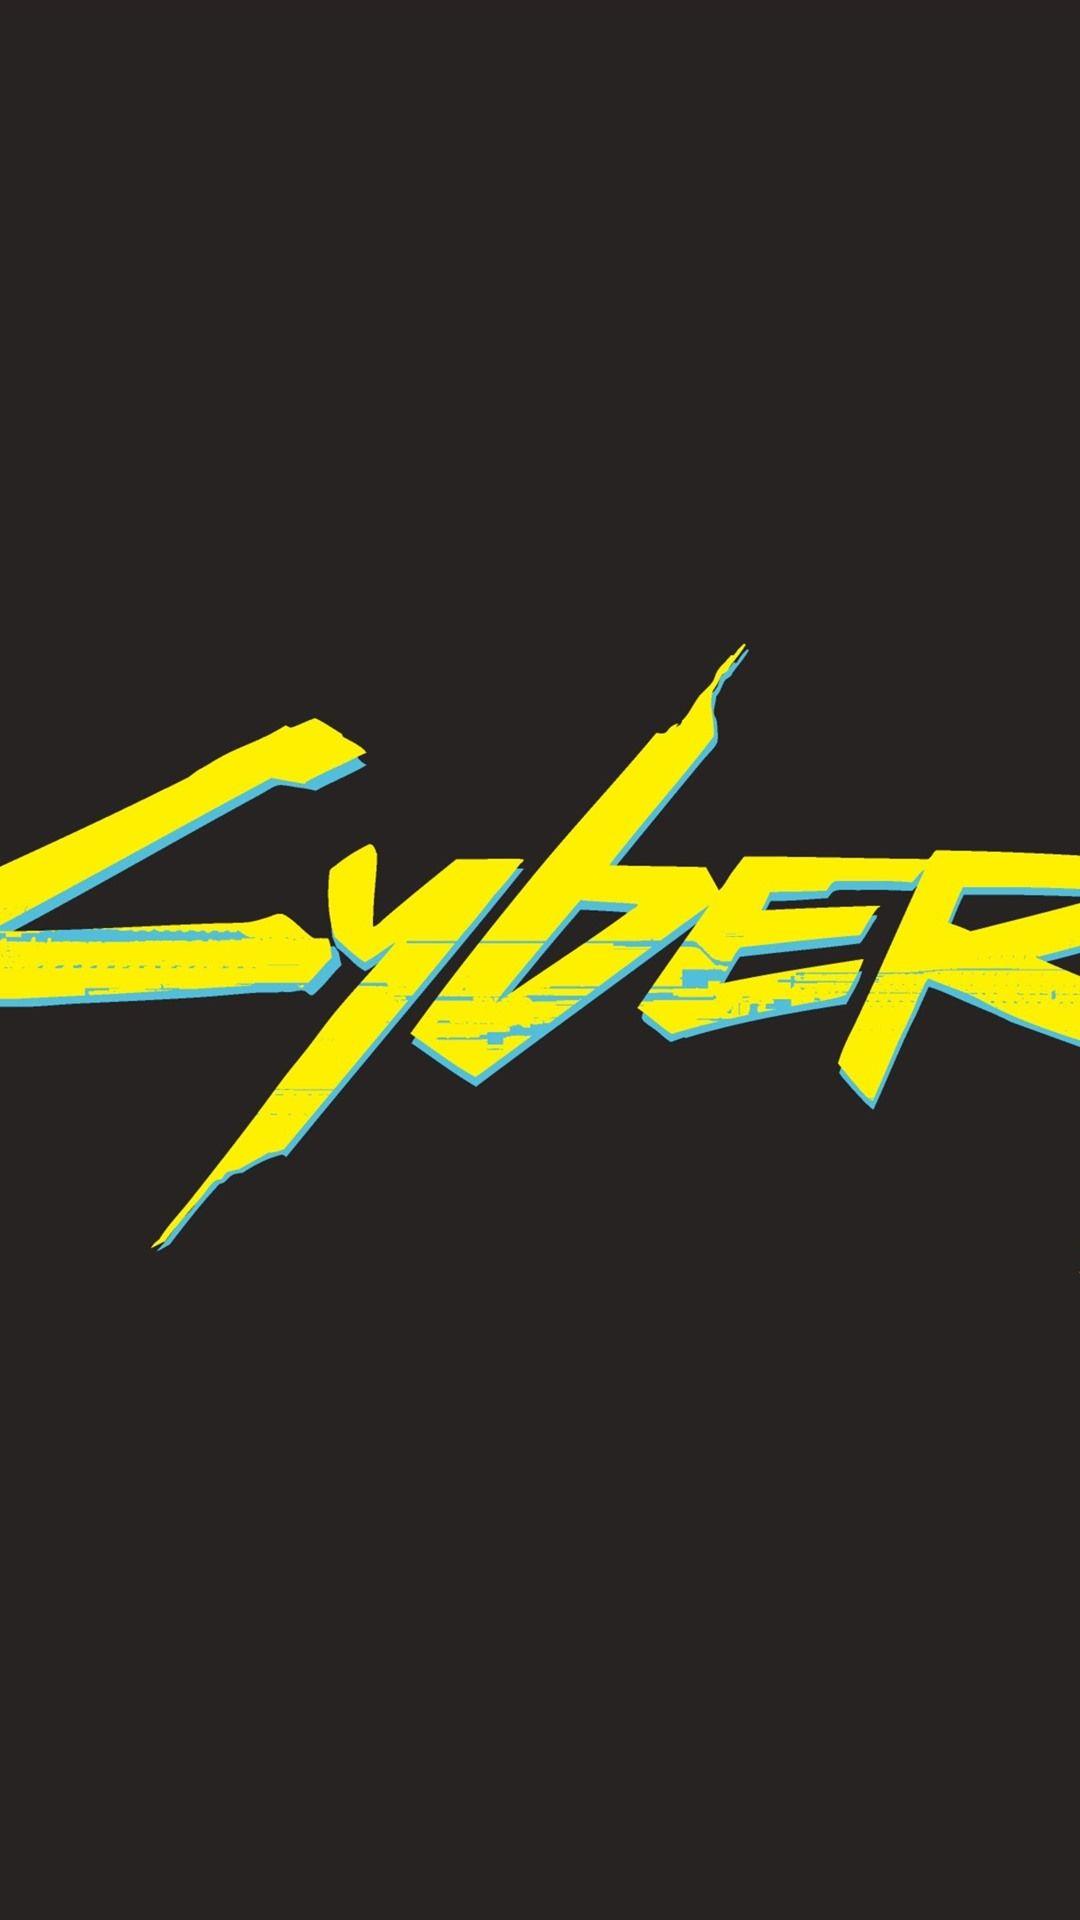 Cyberpunk Logo - Cyberpunk 2077 logo 1080x1920 iPhone 8/7/6/6S Plus wallpaper ...